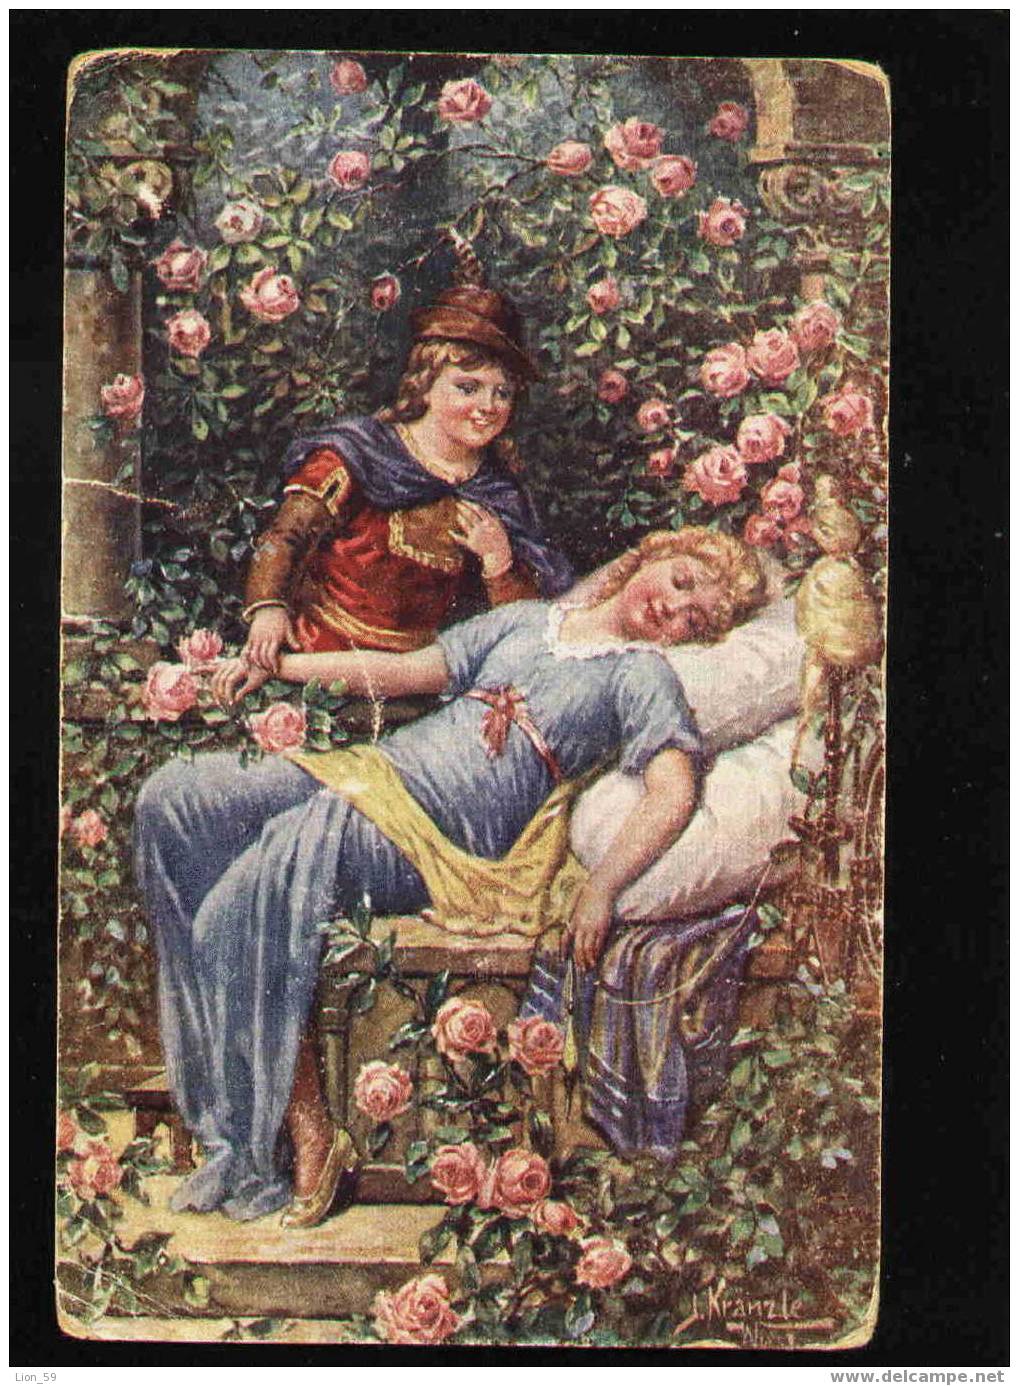 Art KRAENZLE - TALE J. Love Lady Pc 5008 F.H.&S.W.IX  , SALON APART / 19089 - Kraenzle